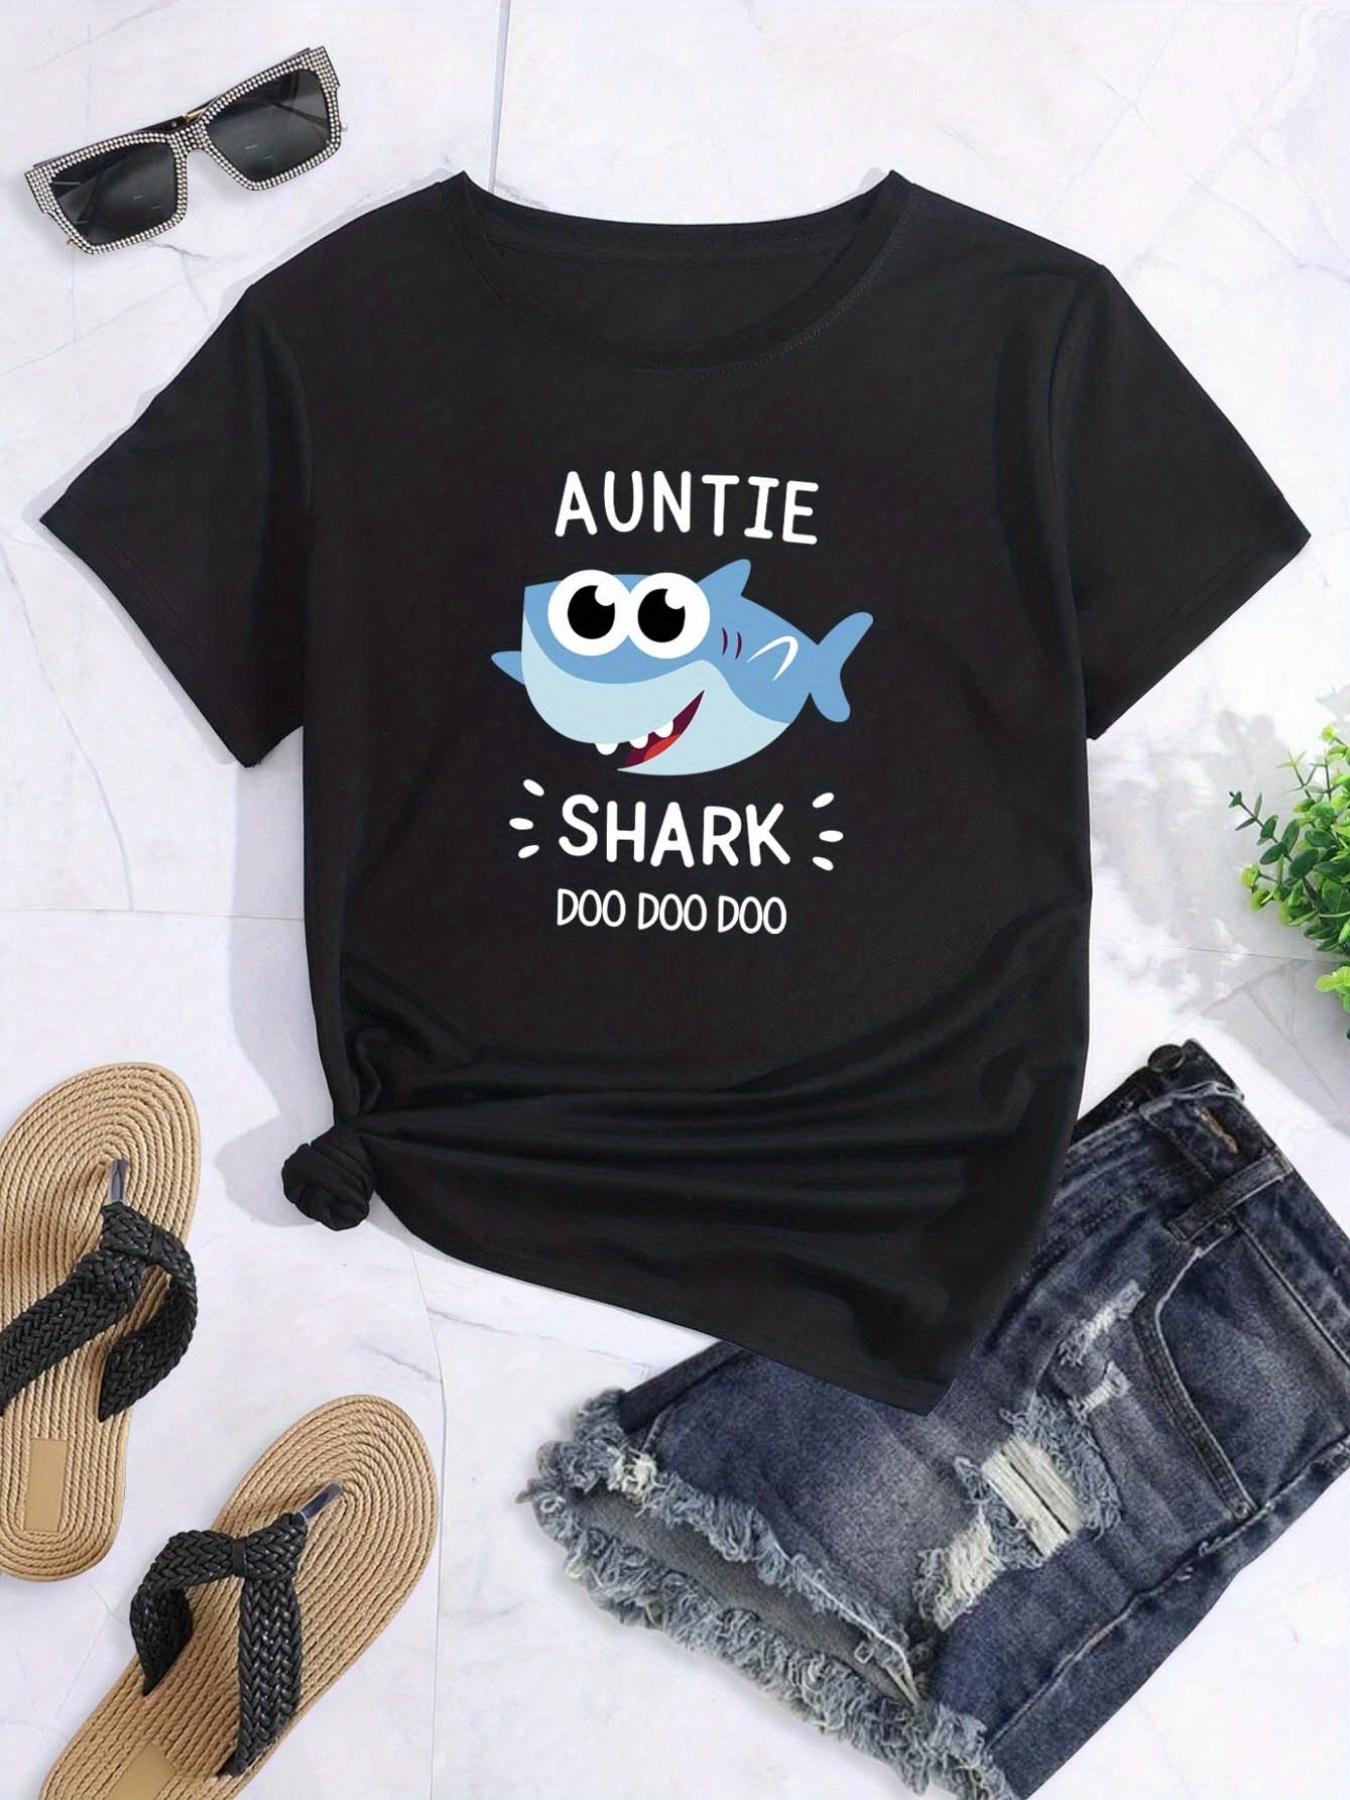 Shein Curve Women’s 2XL Auntie Graphic Print T-Shirt